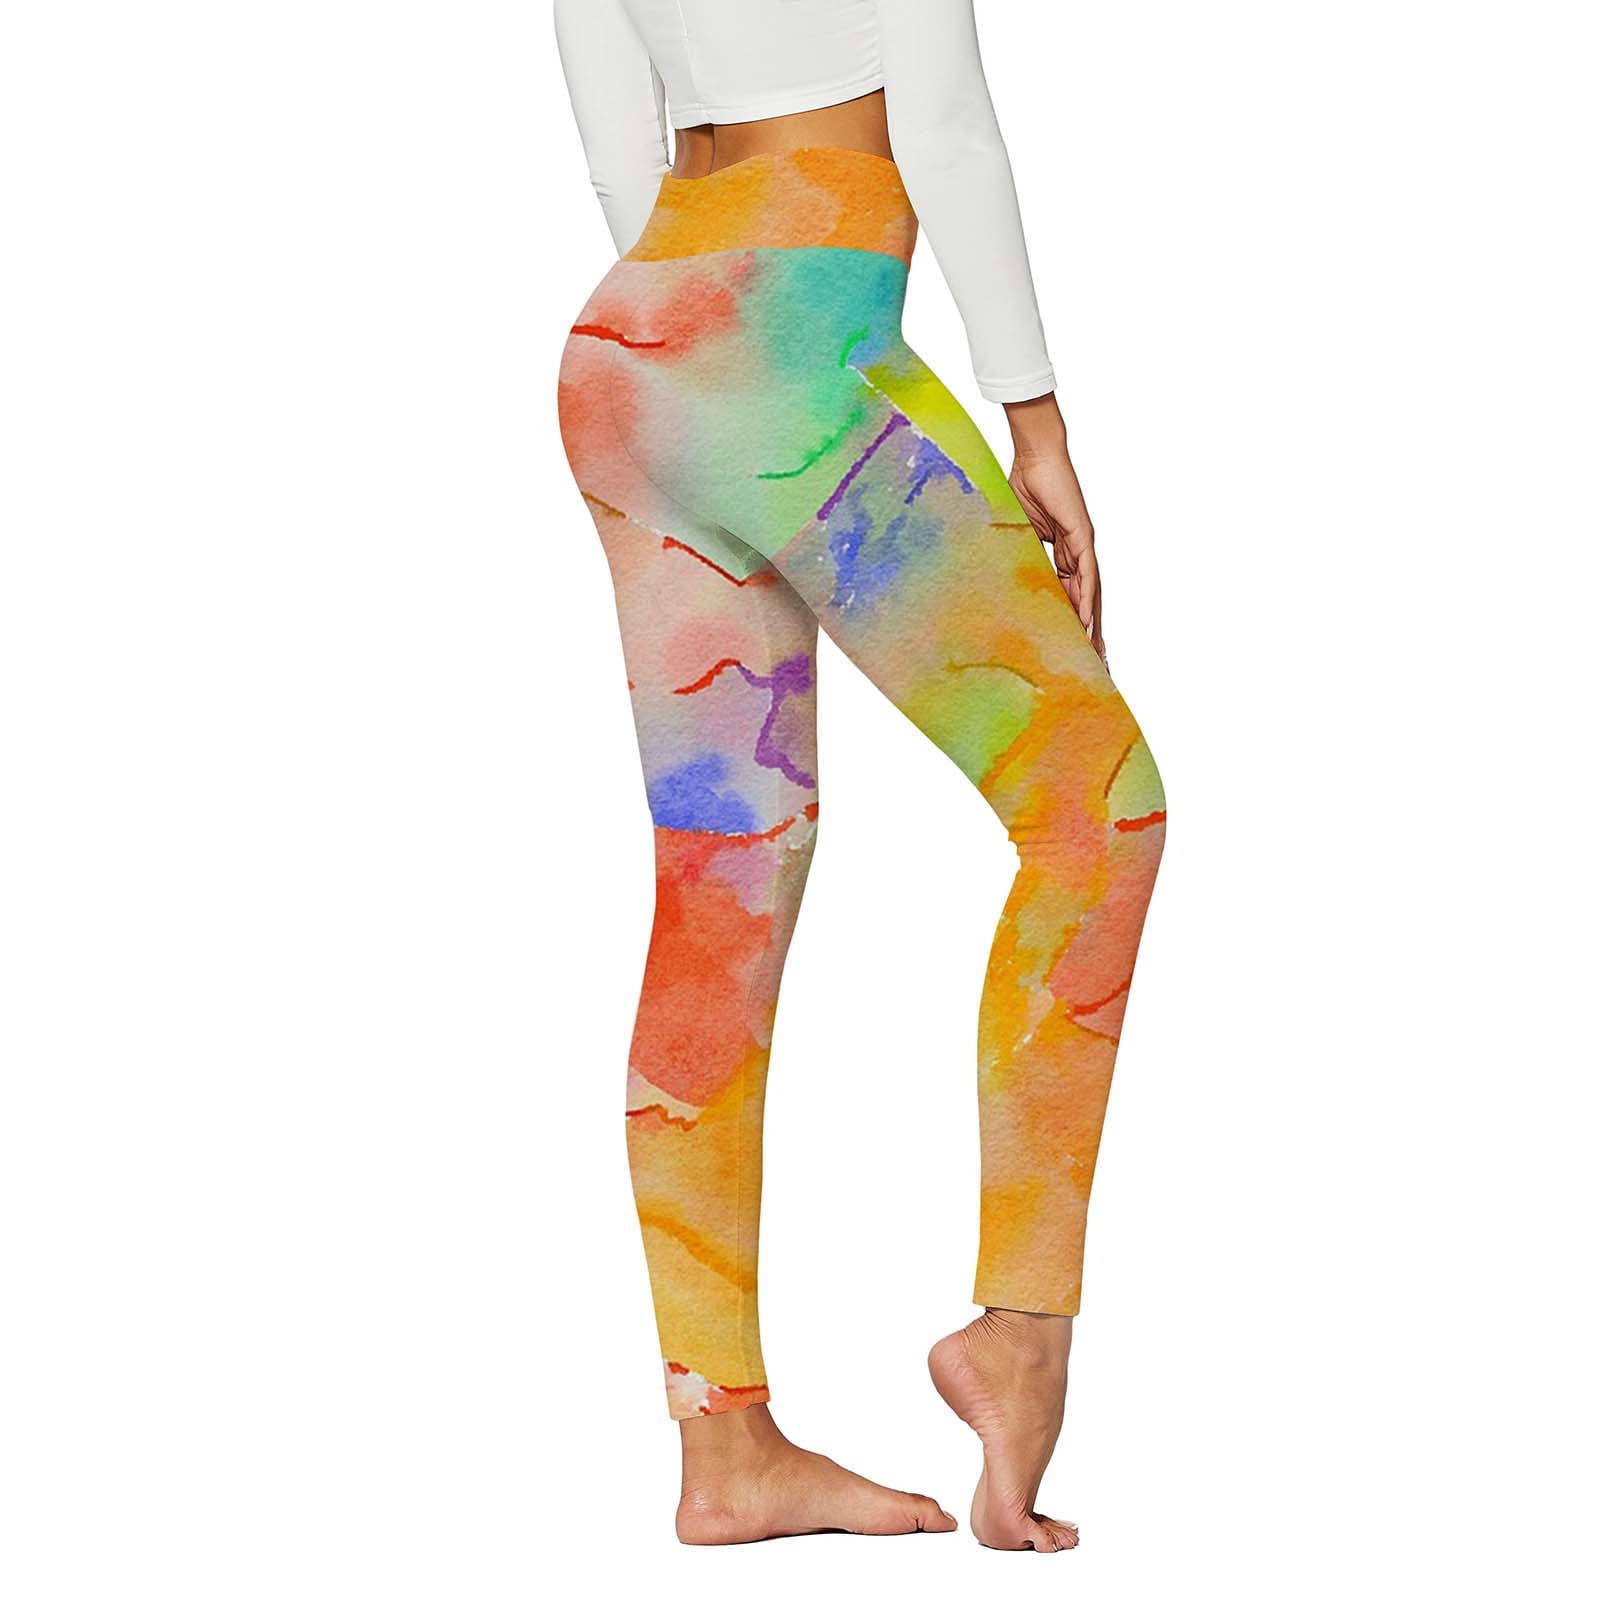 EQWLJWE Yoga Pants for Women High Waist Yoga Shorts for Women with